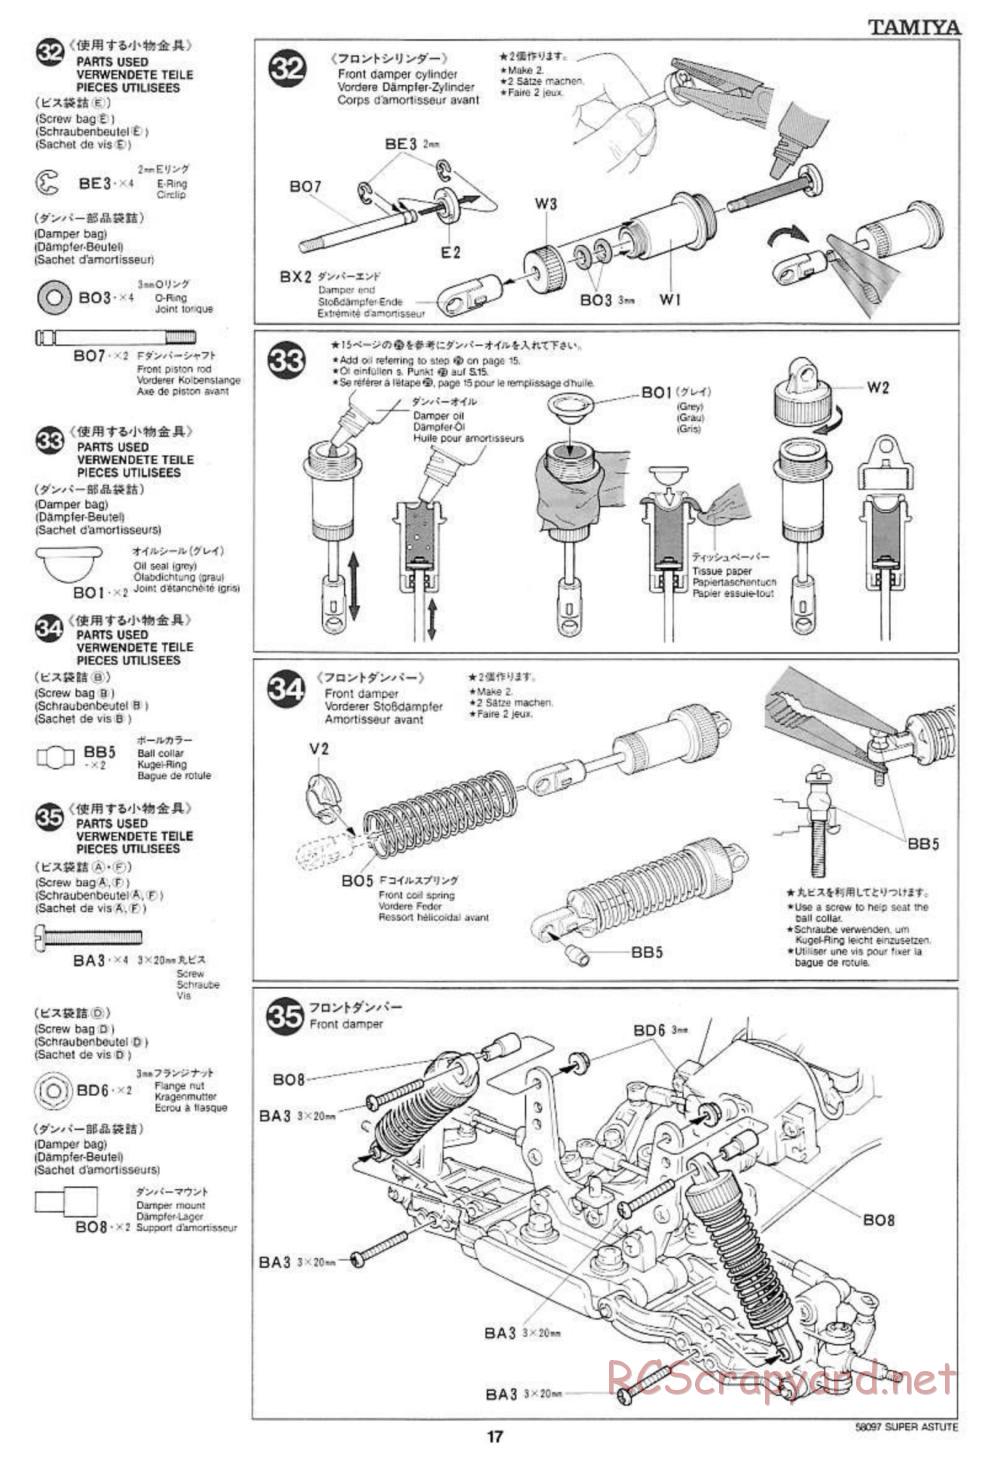 Tamiya - Super Astute - 58097 - Manual - Page 17